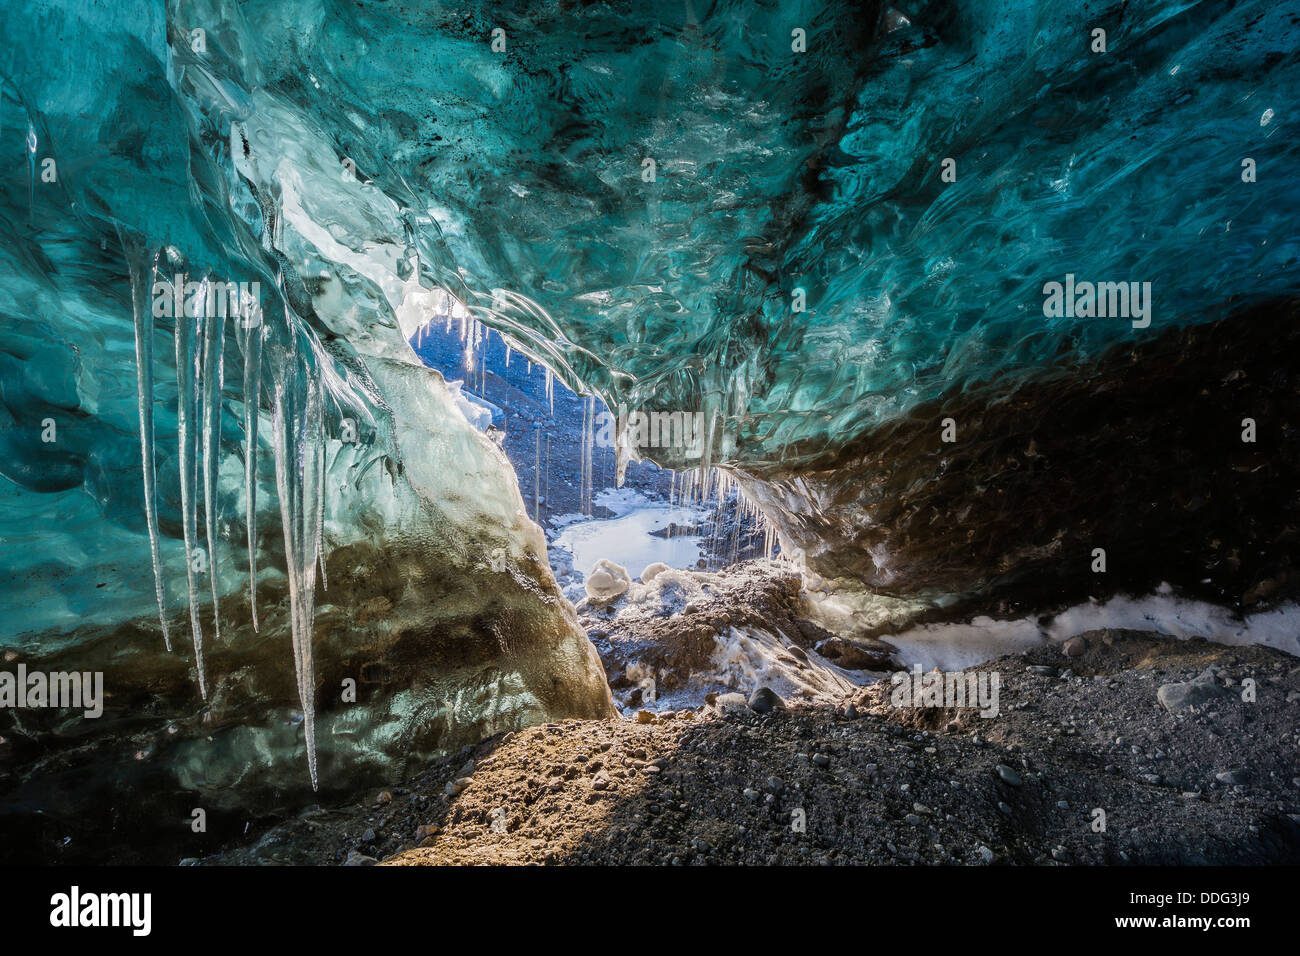 La grotte de glace des glaciers, l'Islande, Svinafellsjokull Banque D'Images